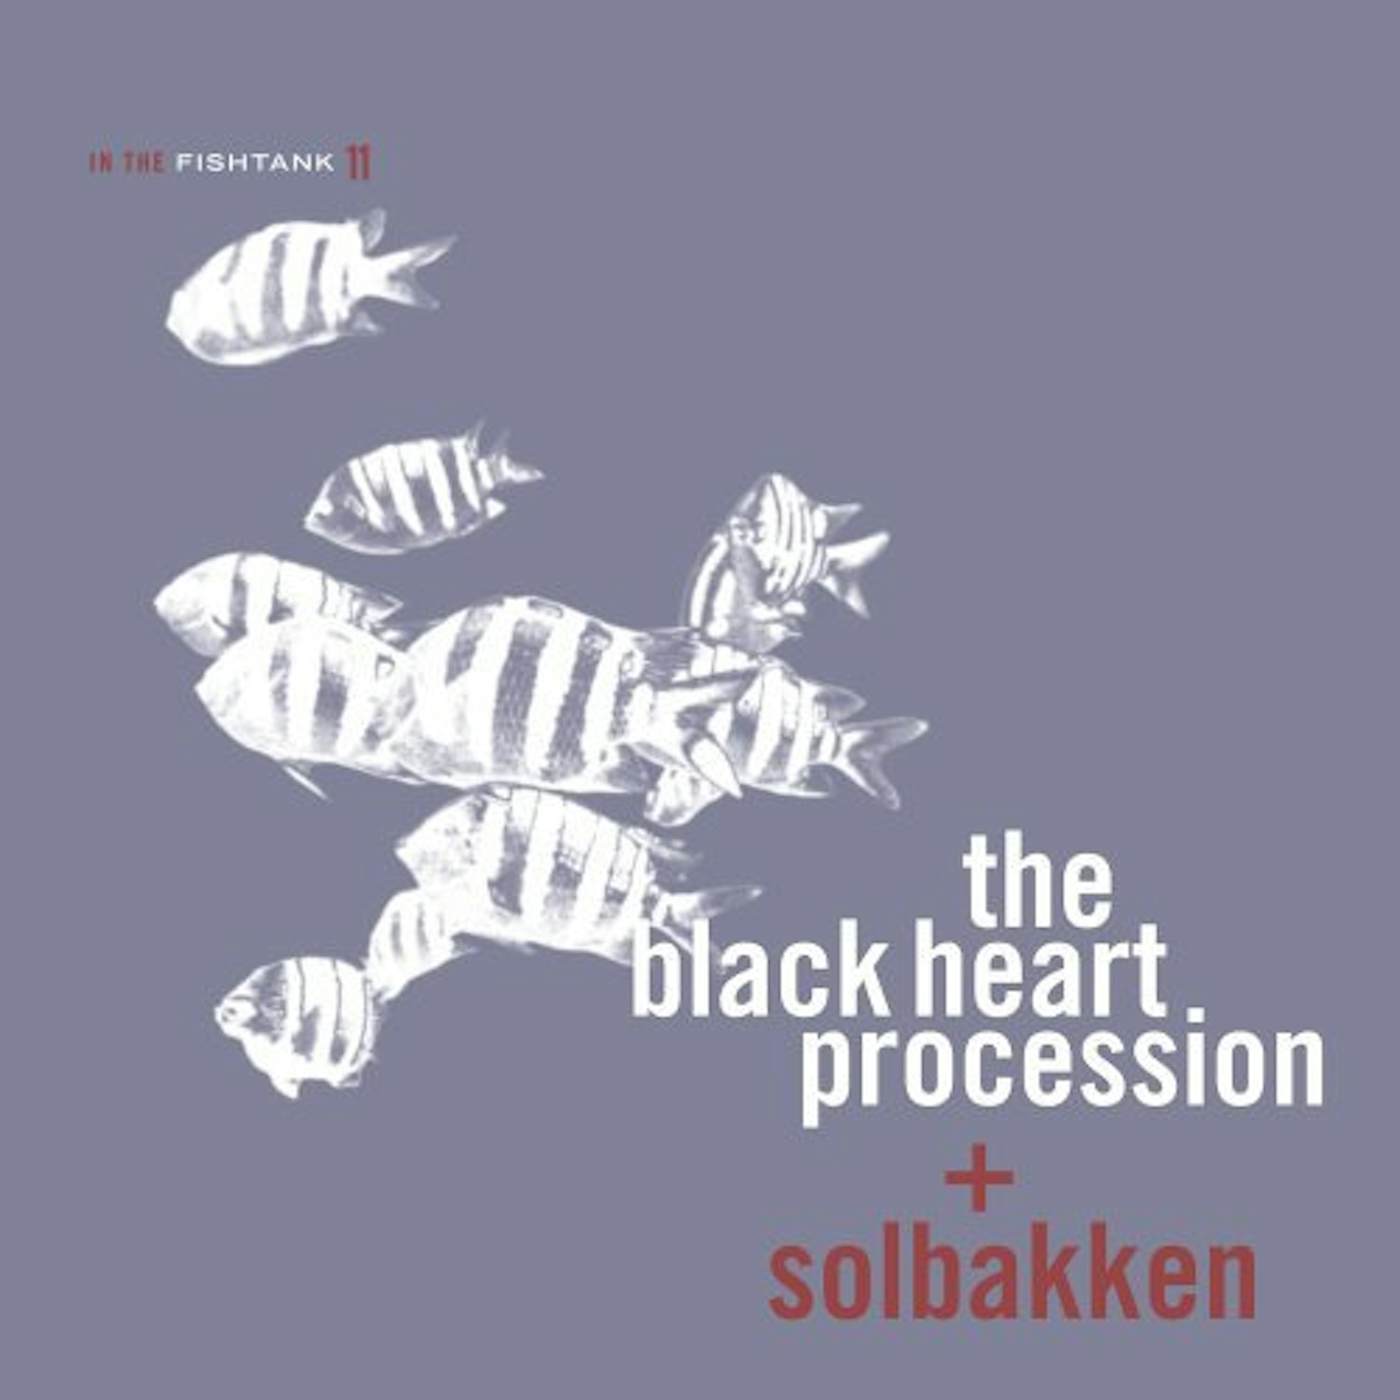 Black Heart Procession / Solbakken IN THE FISHTANK 11  (SLV) Vinyl Record - Colored Vinyl